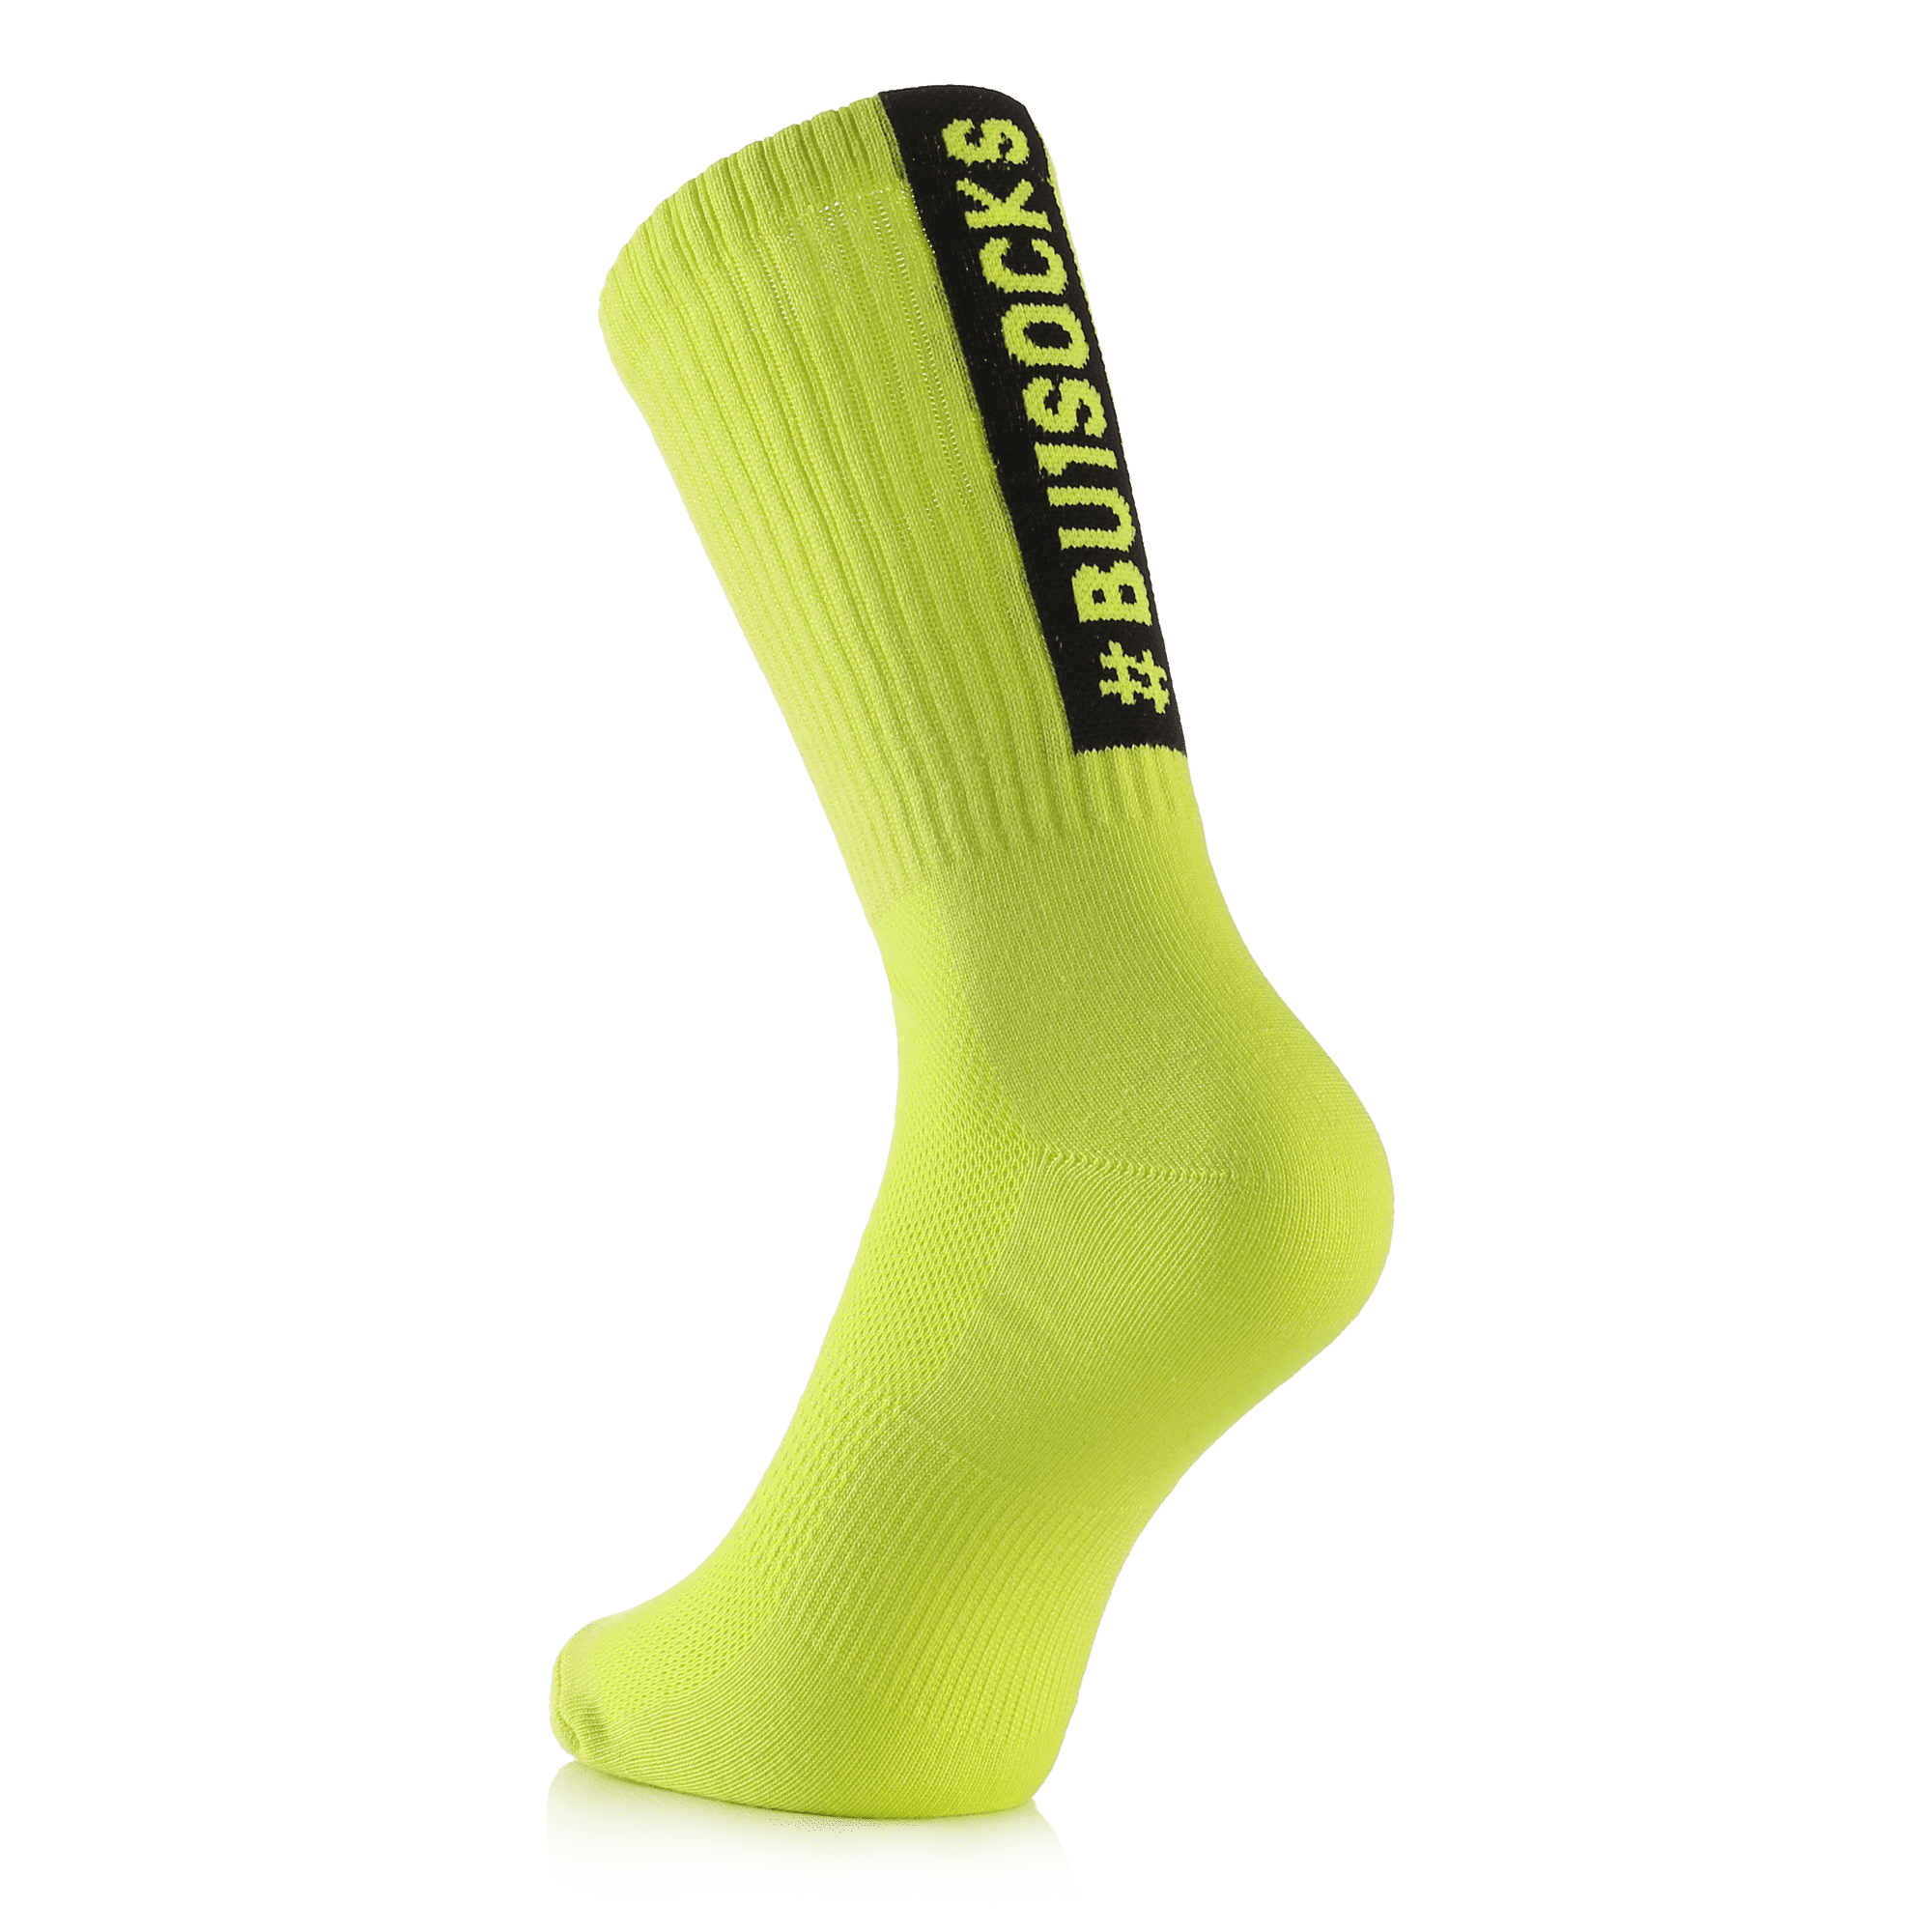 Sports Socks Png